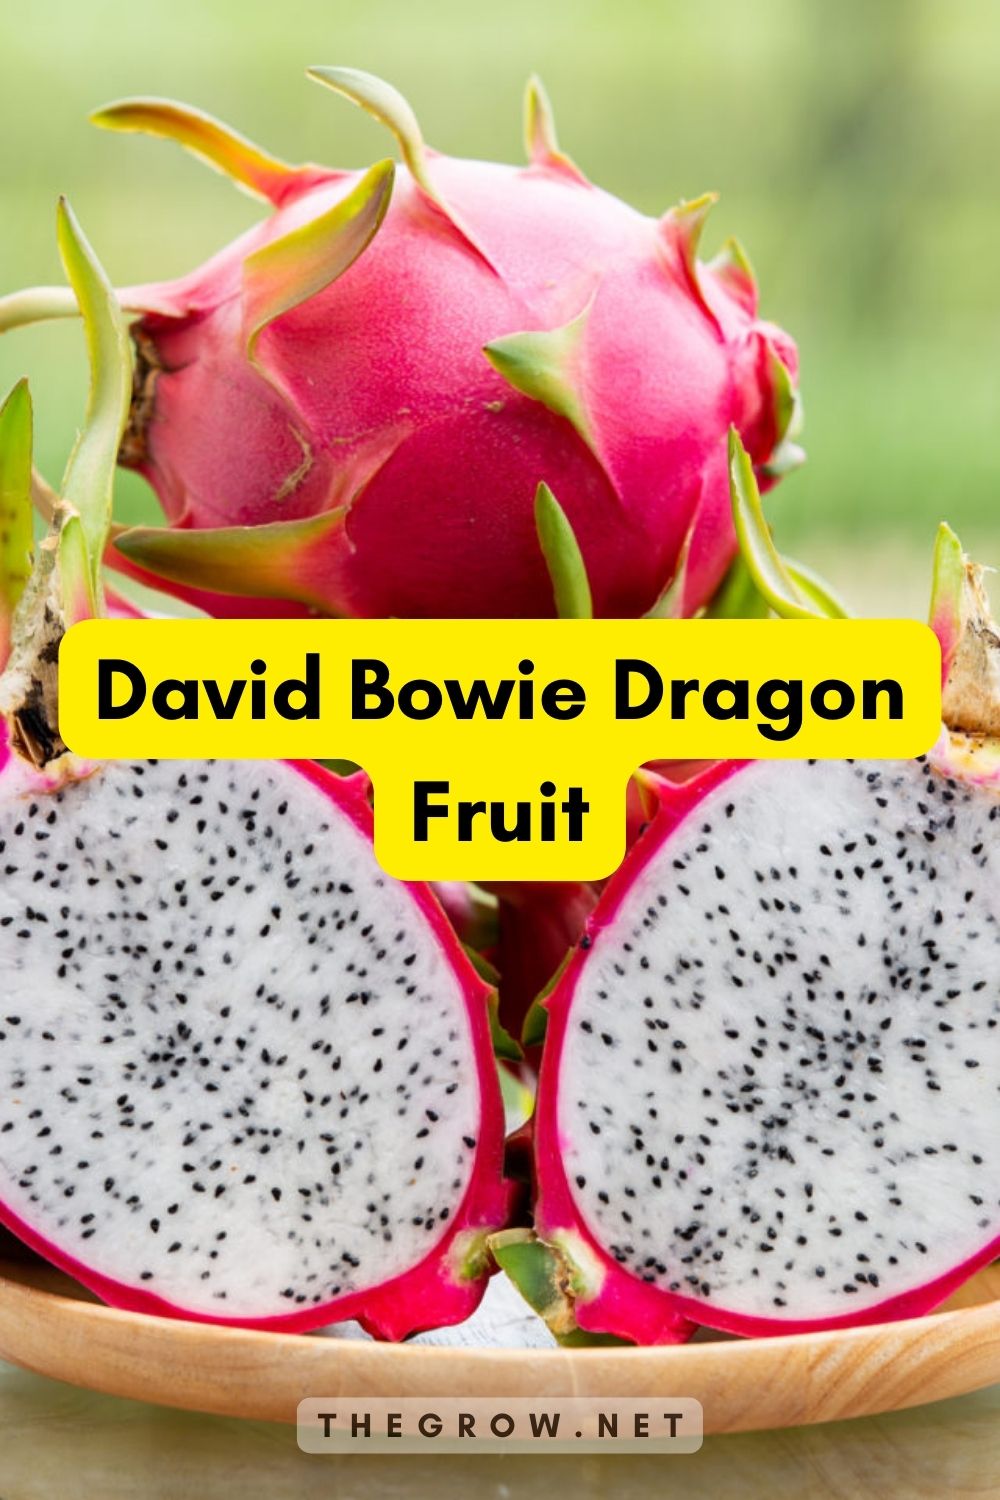 David Bowie Dragon Fruit